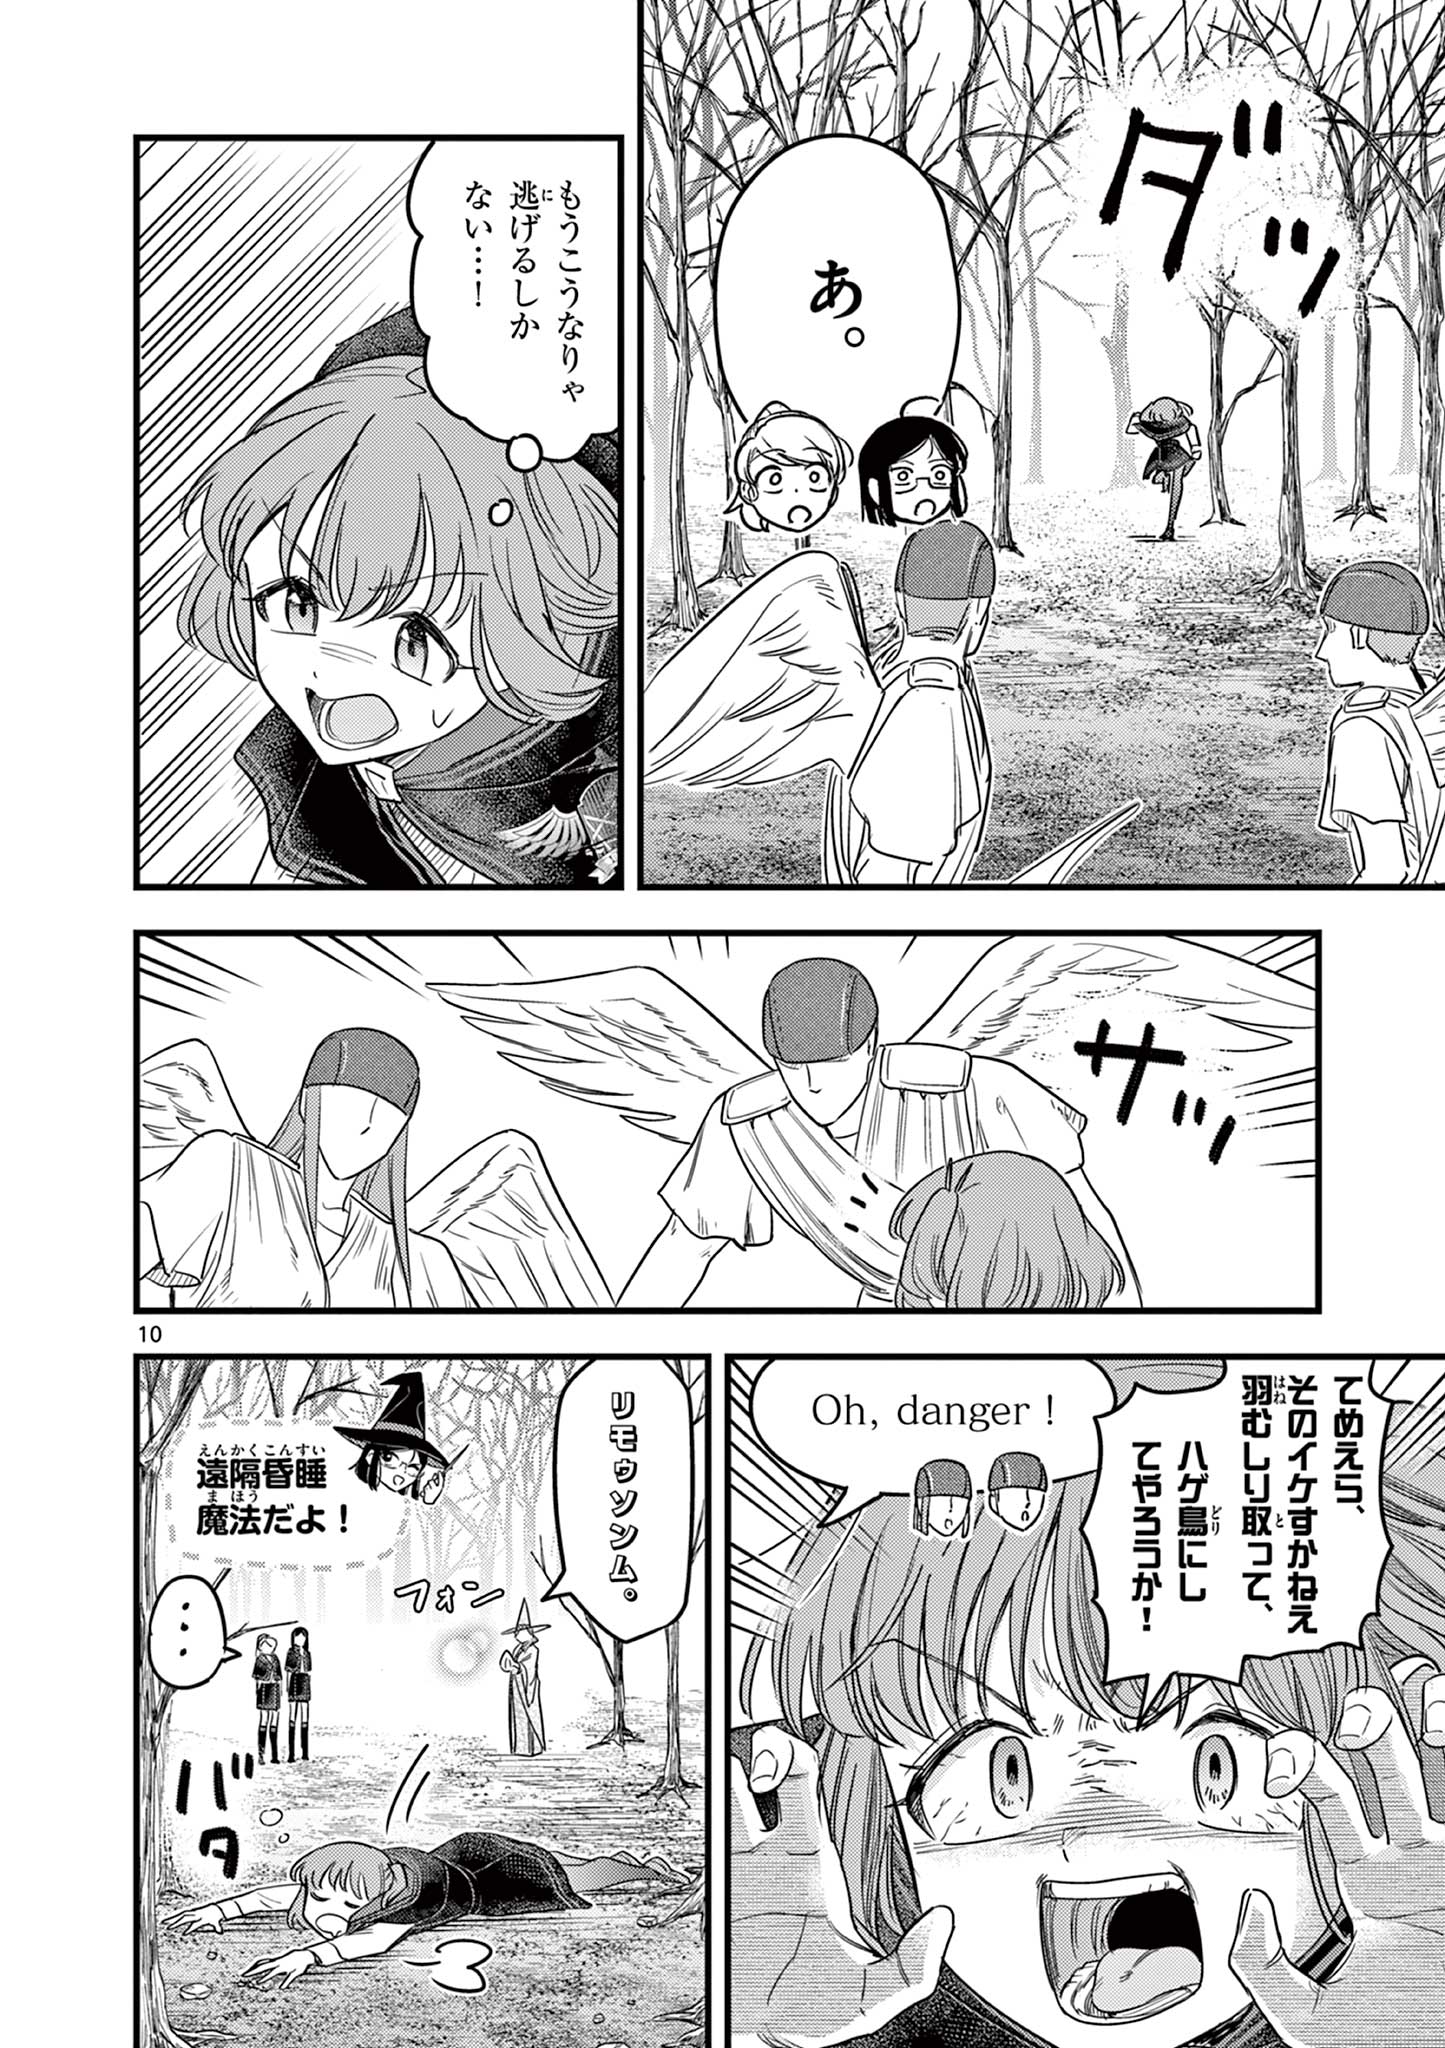 Kuro Mahou Ryou no Sanakunin - Chapter 8 - Page 10